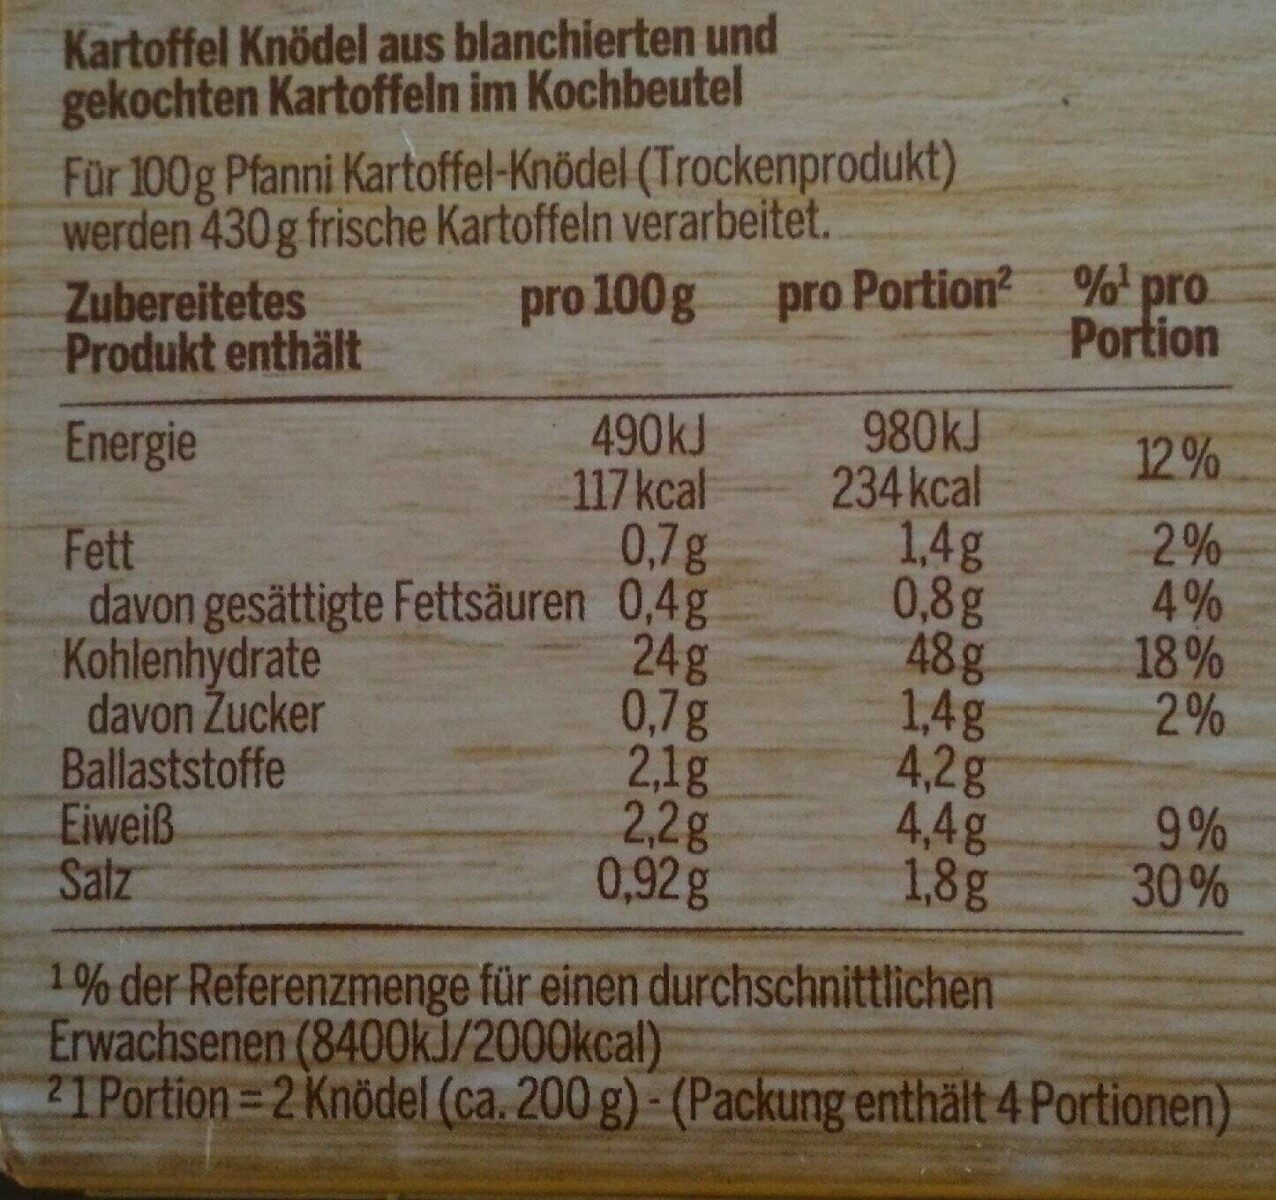 Knödel - Kartoffel Knödel Halb & Halb - Nährwertangaben